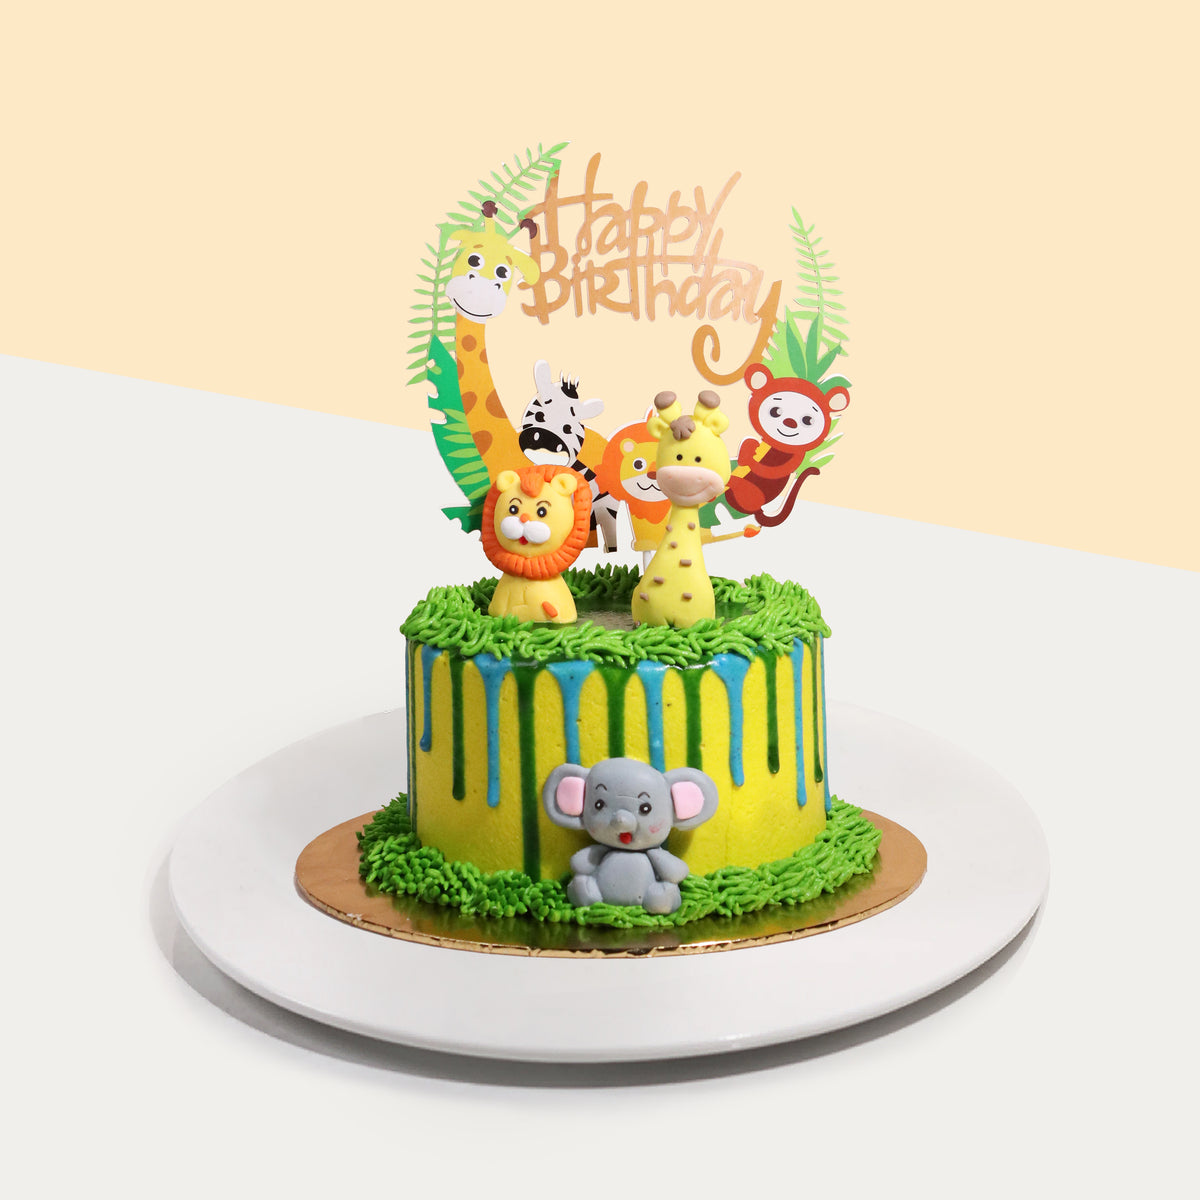 The Idea King - Cute animal cakes 🎂 | Facebook